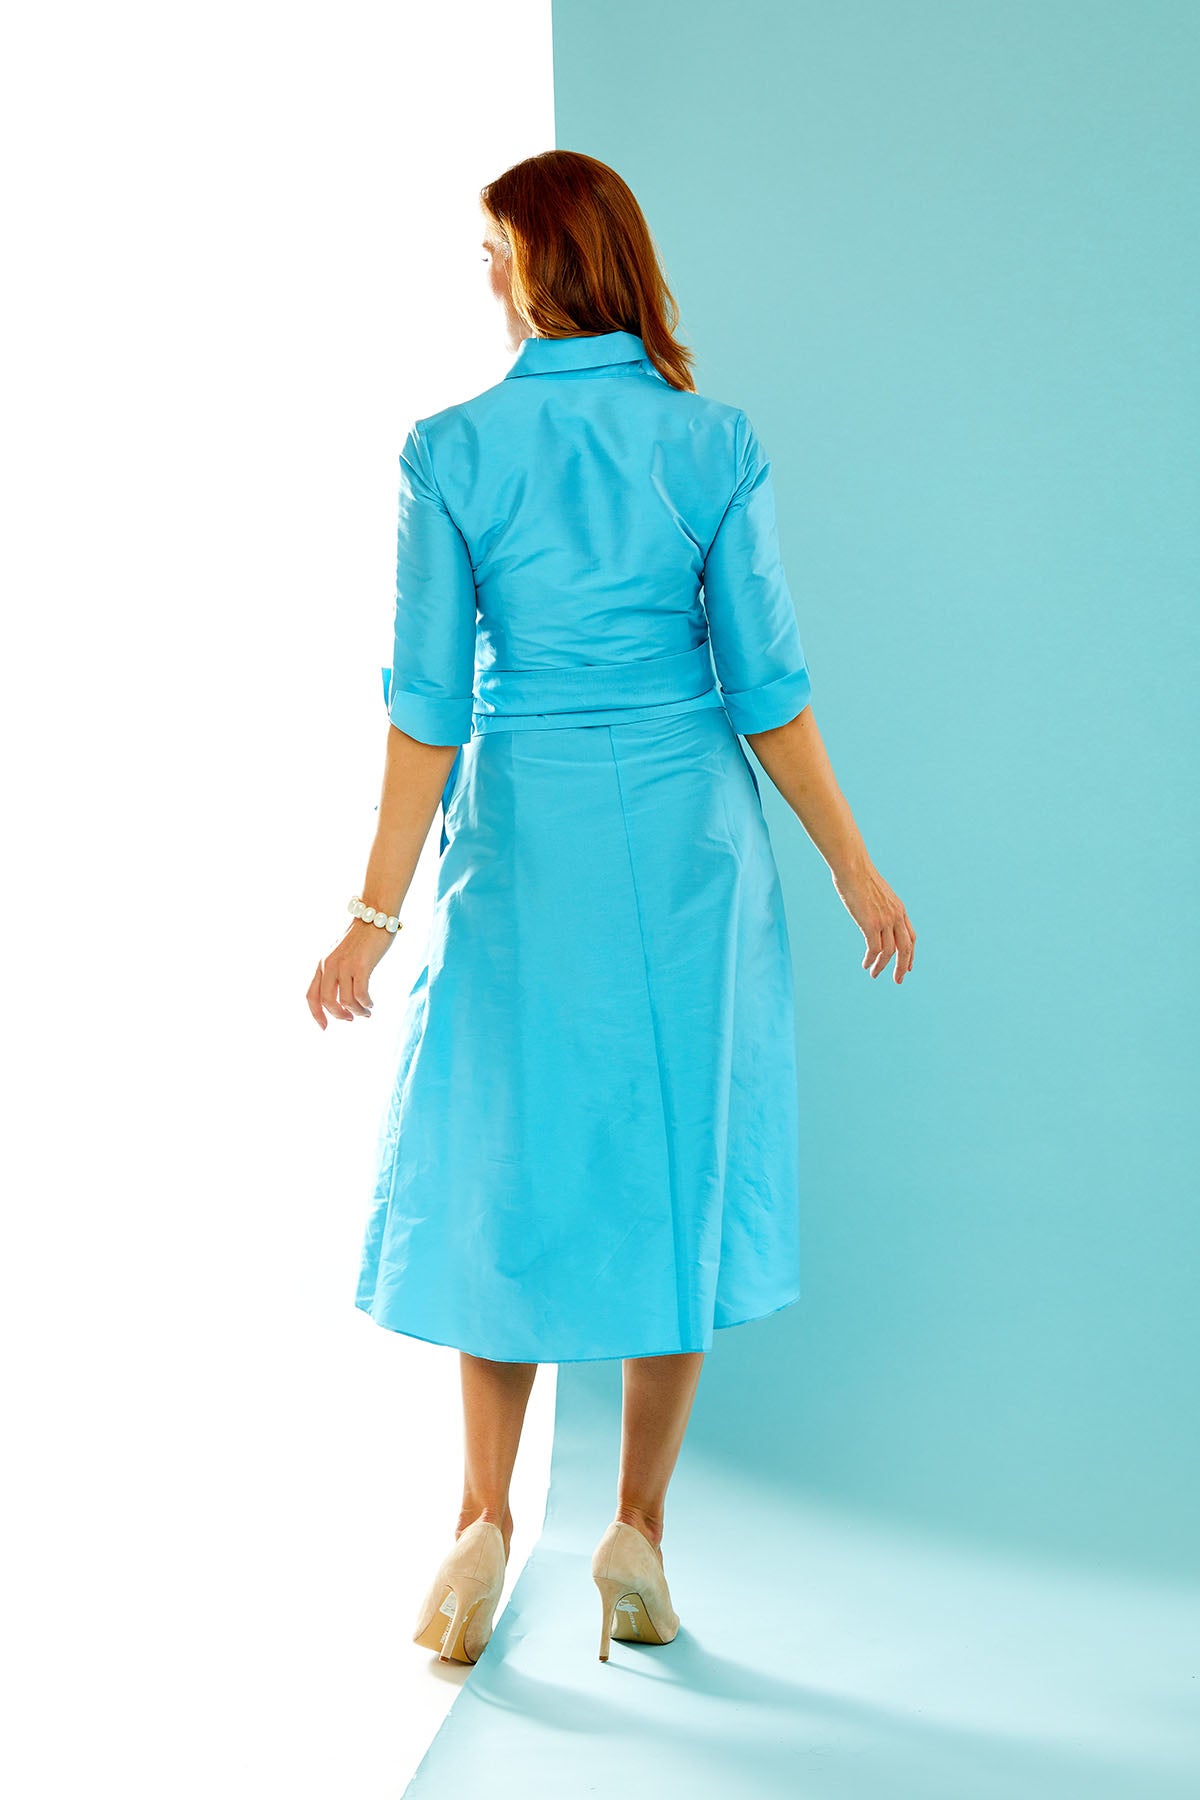 Woman in aqua tea length dress